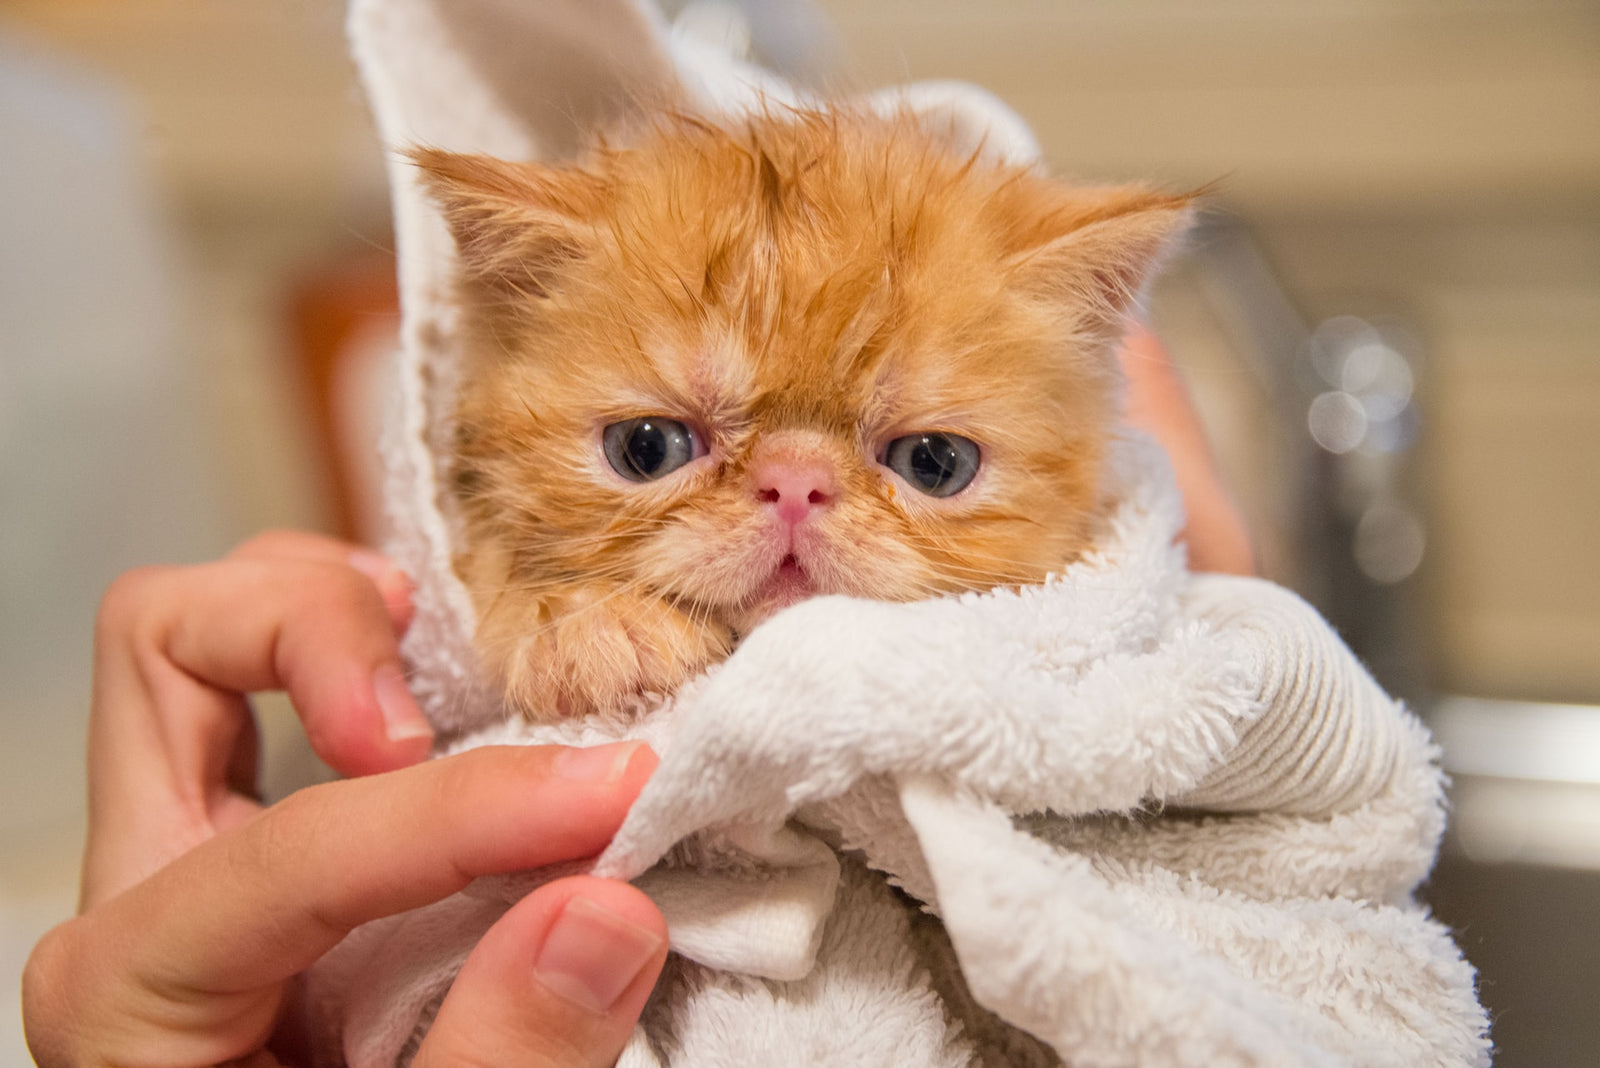 Cat in towel